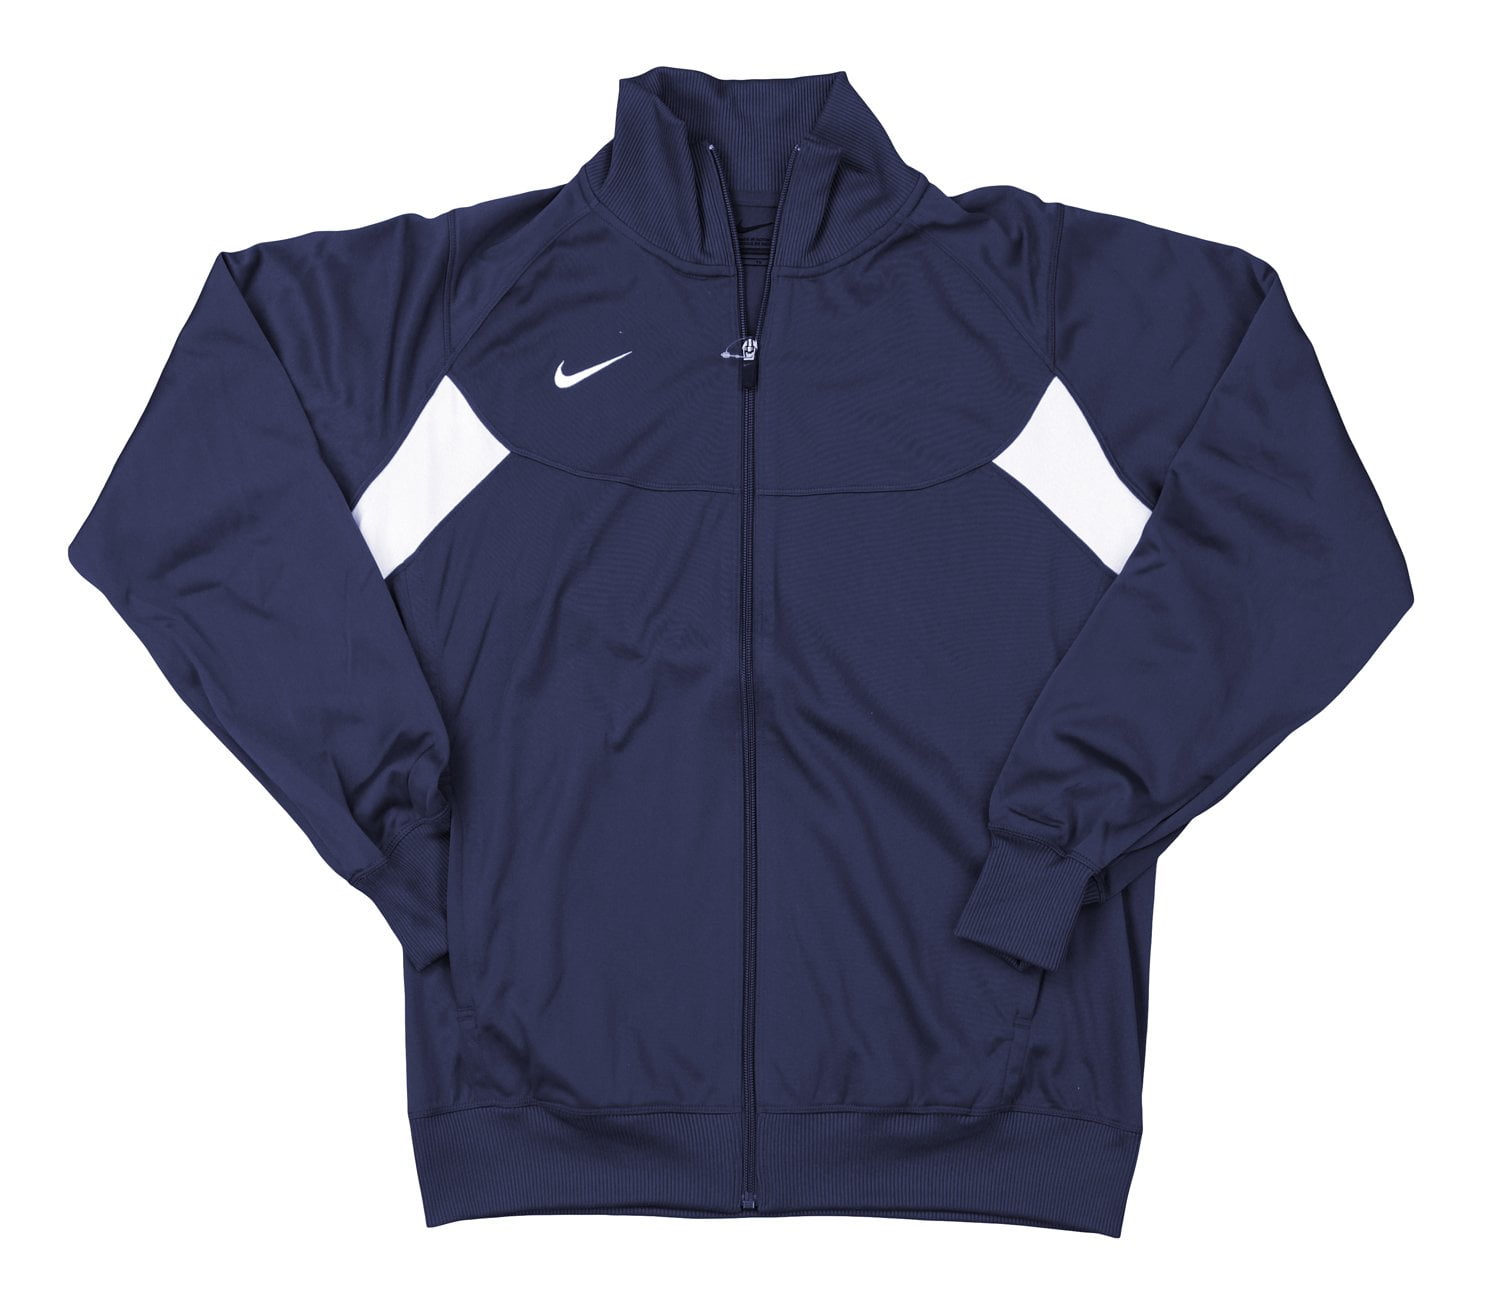 Nike - Nike Women's Pasadena Warm-Up Jacket - Many Colors - Walmart.com ...